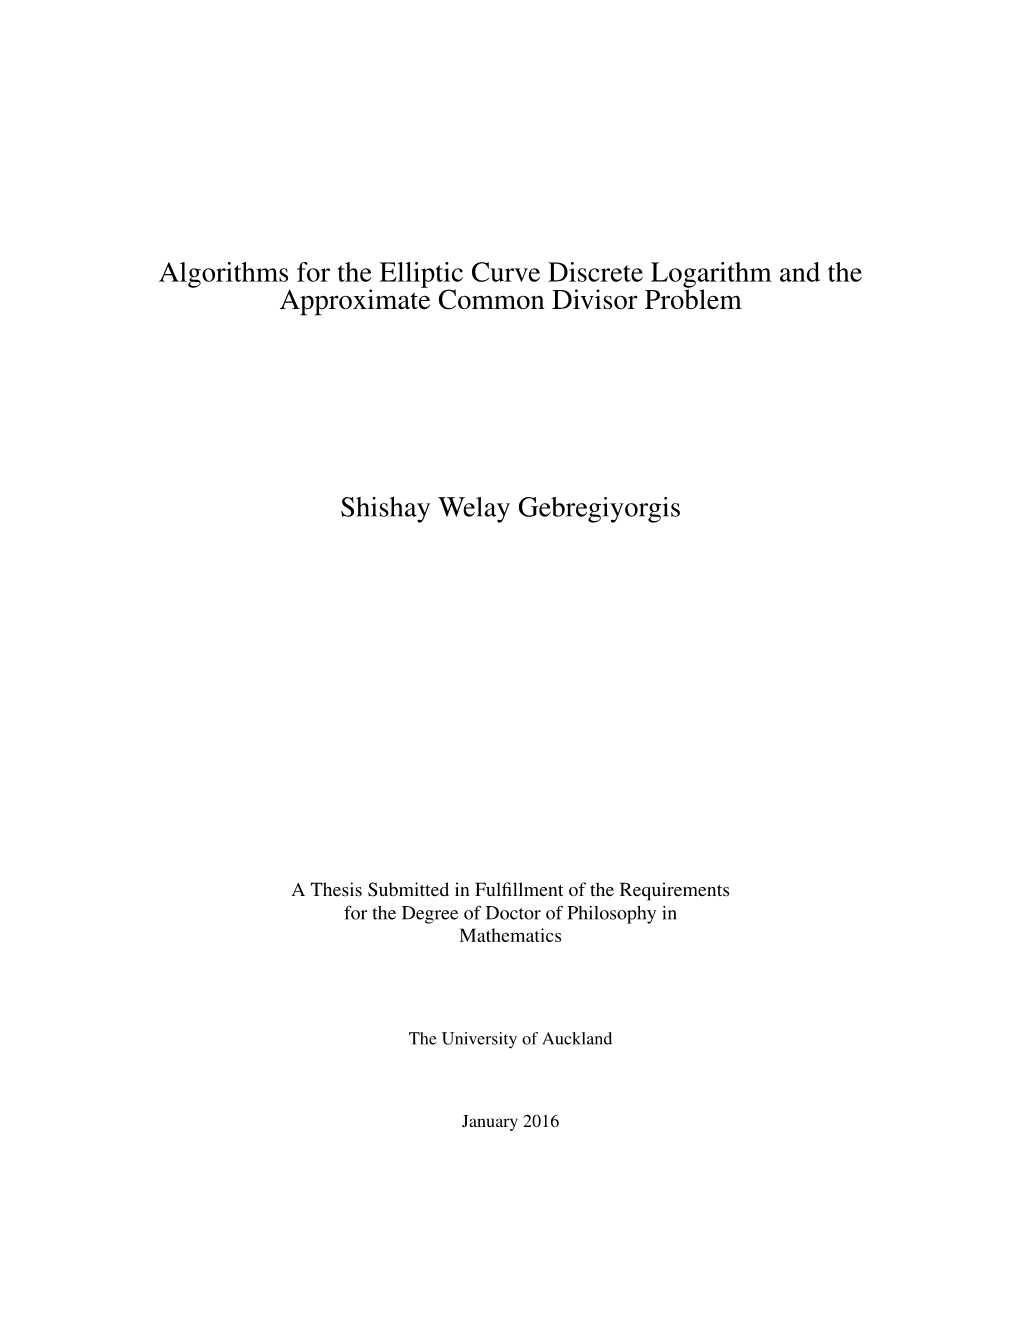 Algorithms for the Elliptic Curve Discrete Logarithm and the Approximate Common Divisor Problem